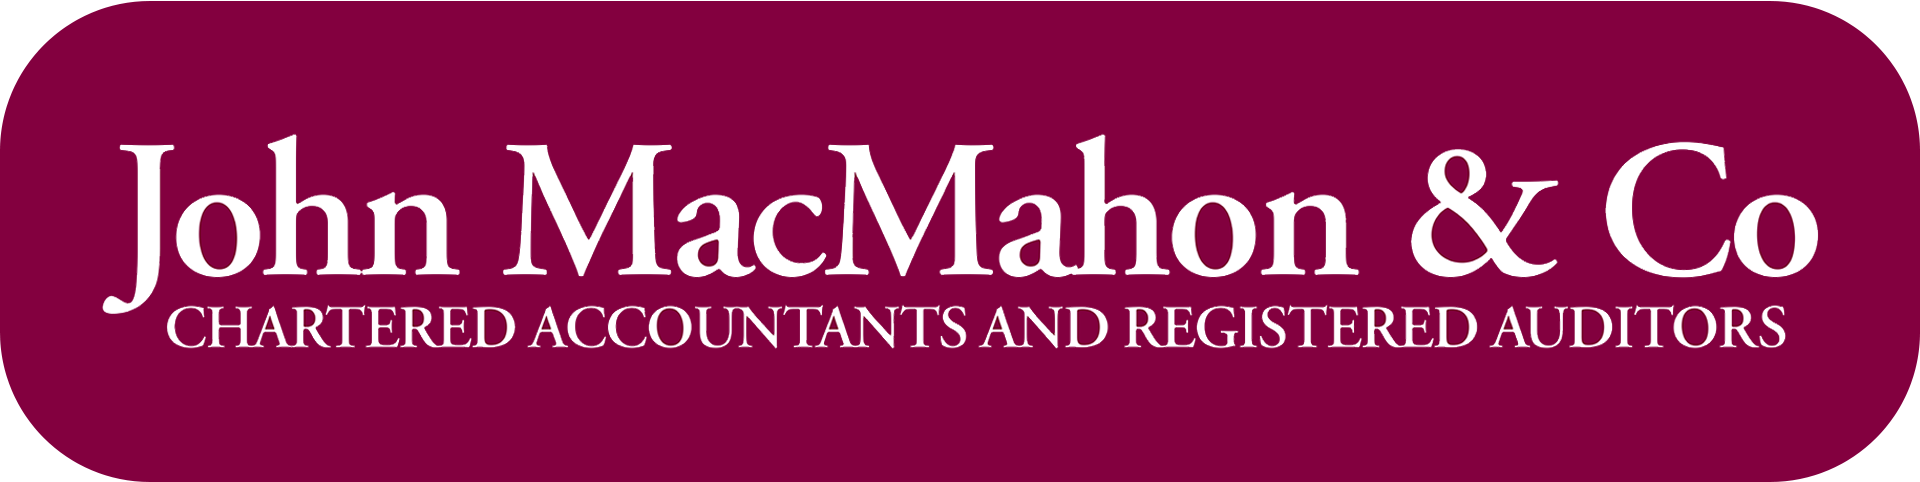 John MacMahon & Co Chartered Accountants & Registered Auditor Logo